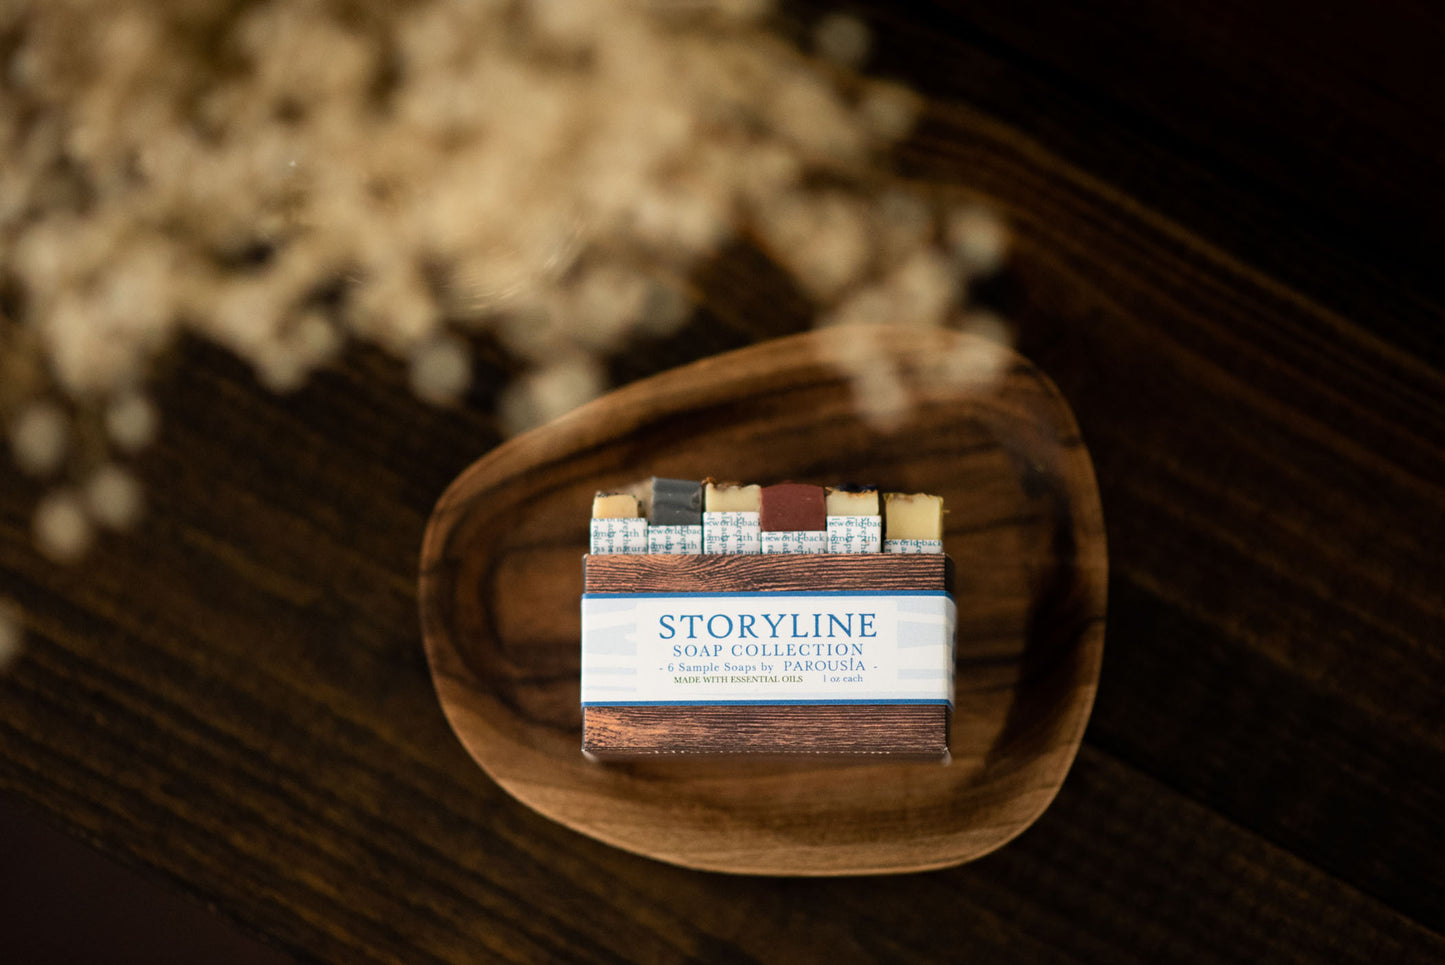 Storyline Soap Sampler